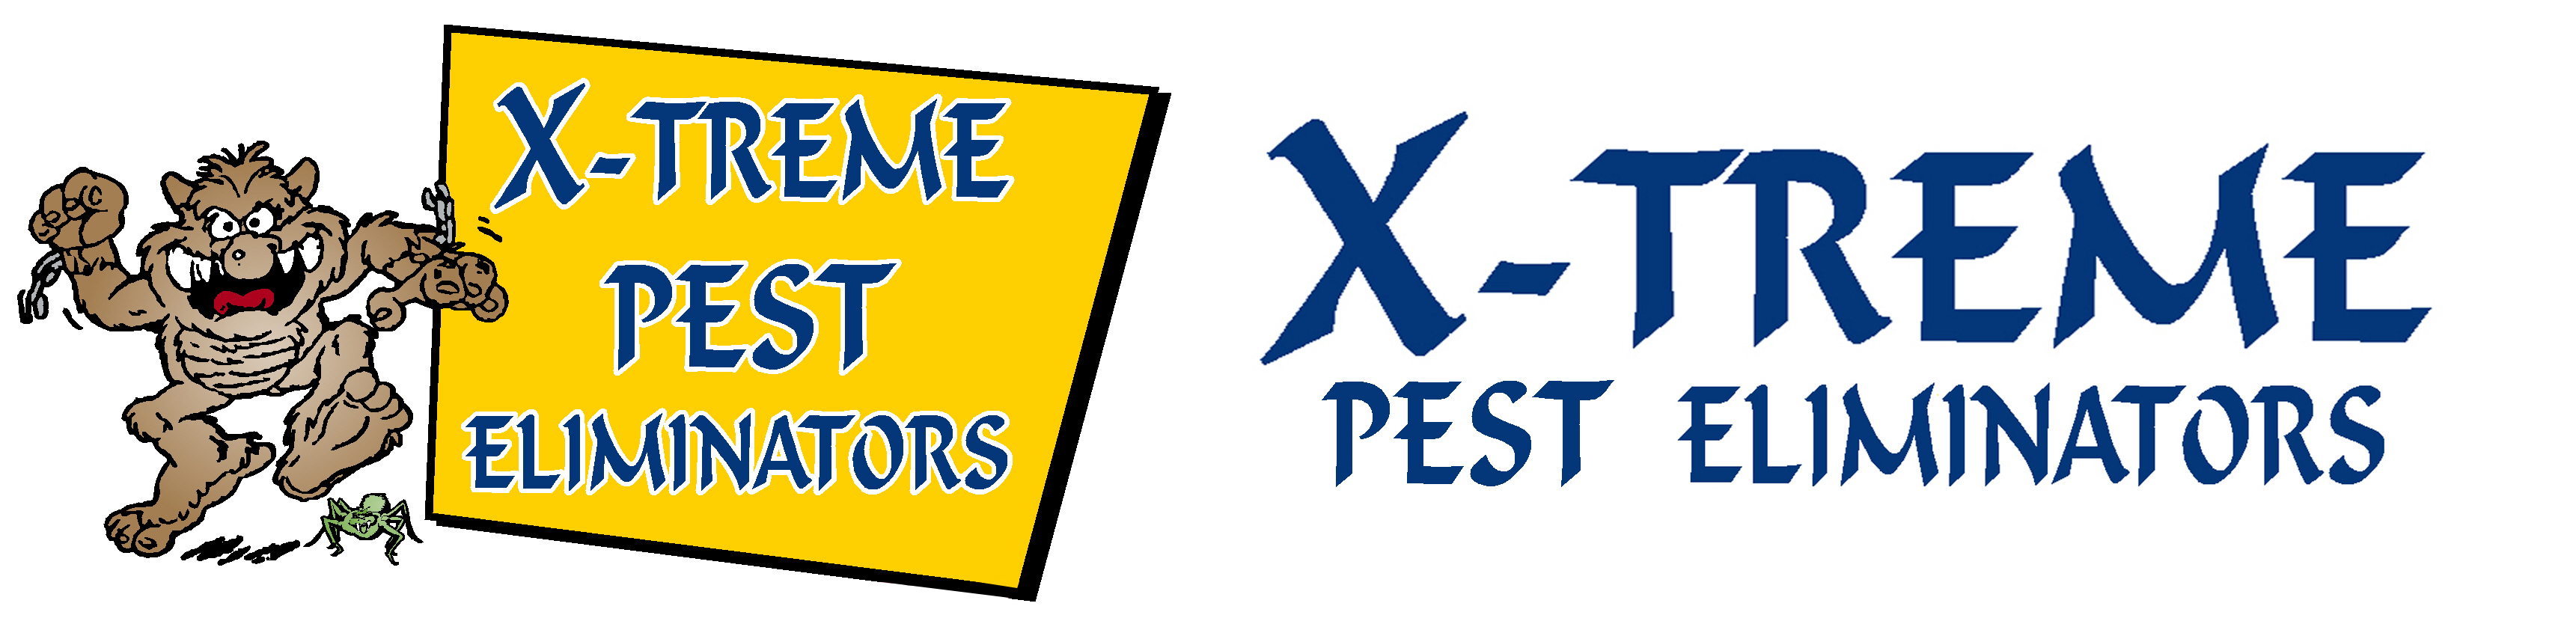 Xtreme-logo4